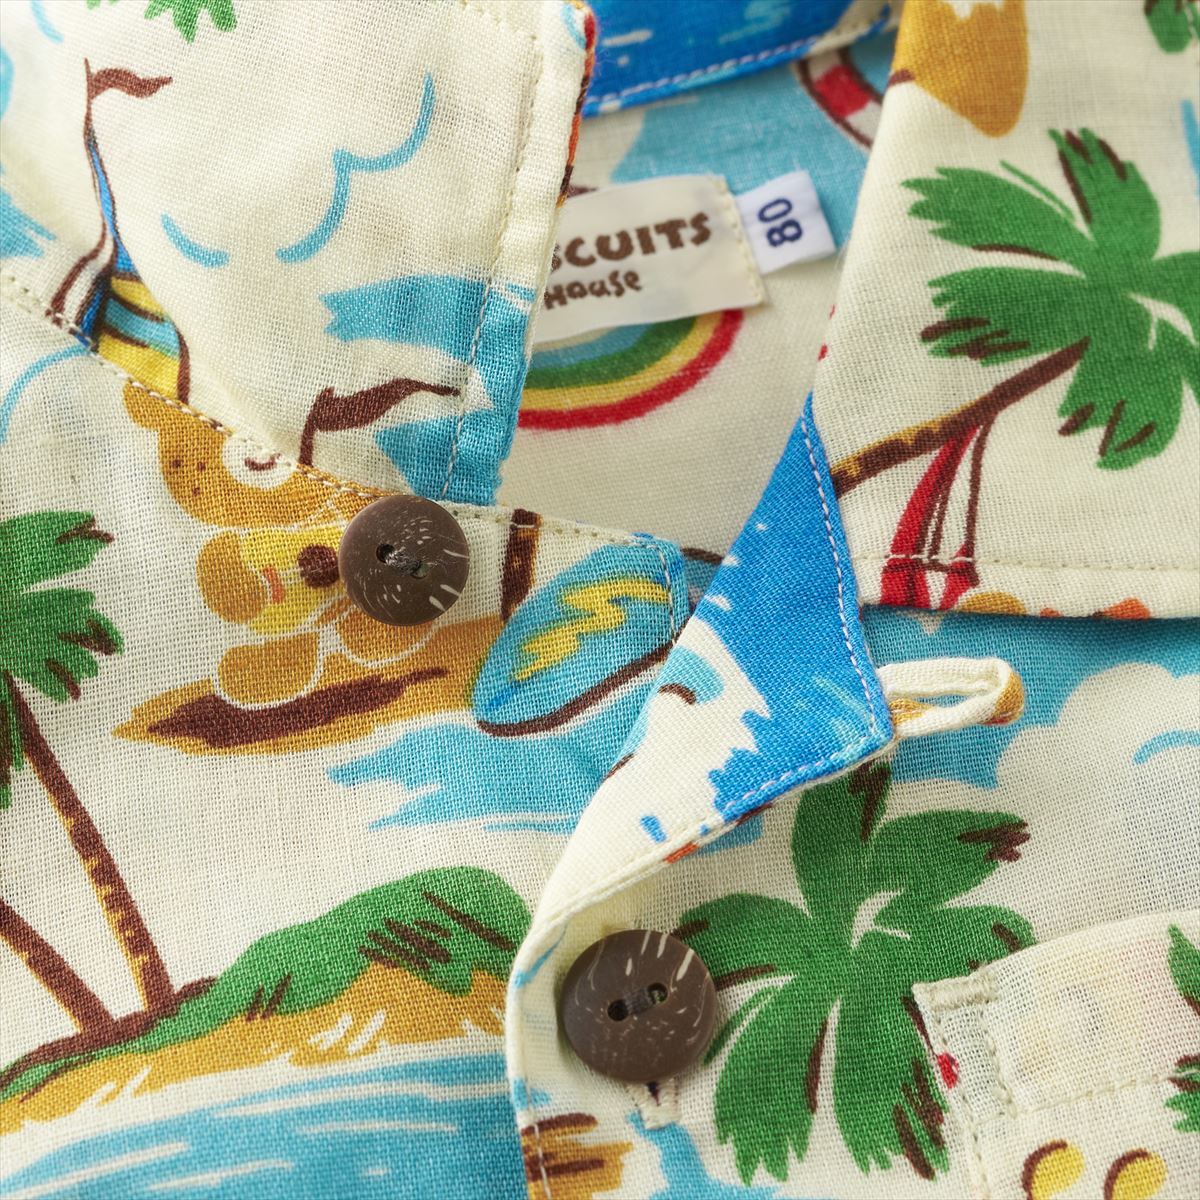 HOT BISCUITS Aloha Resort Shirt